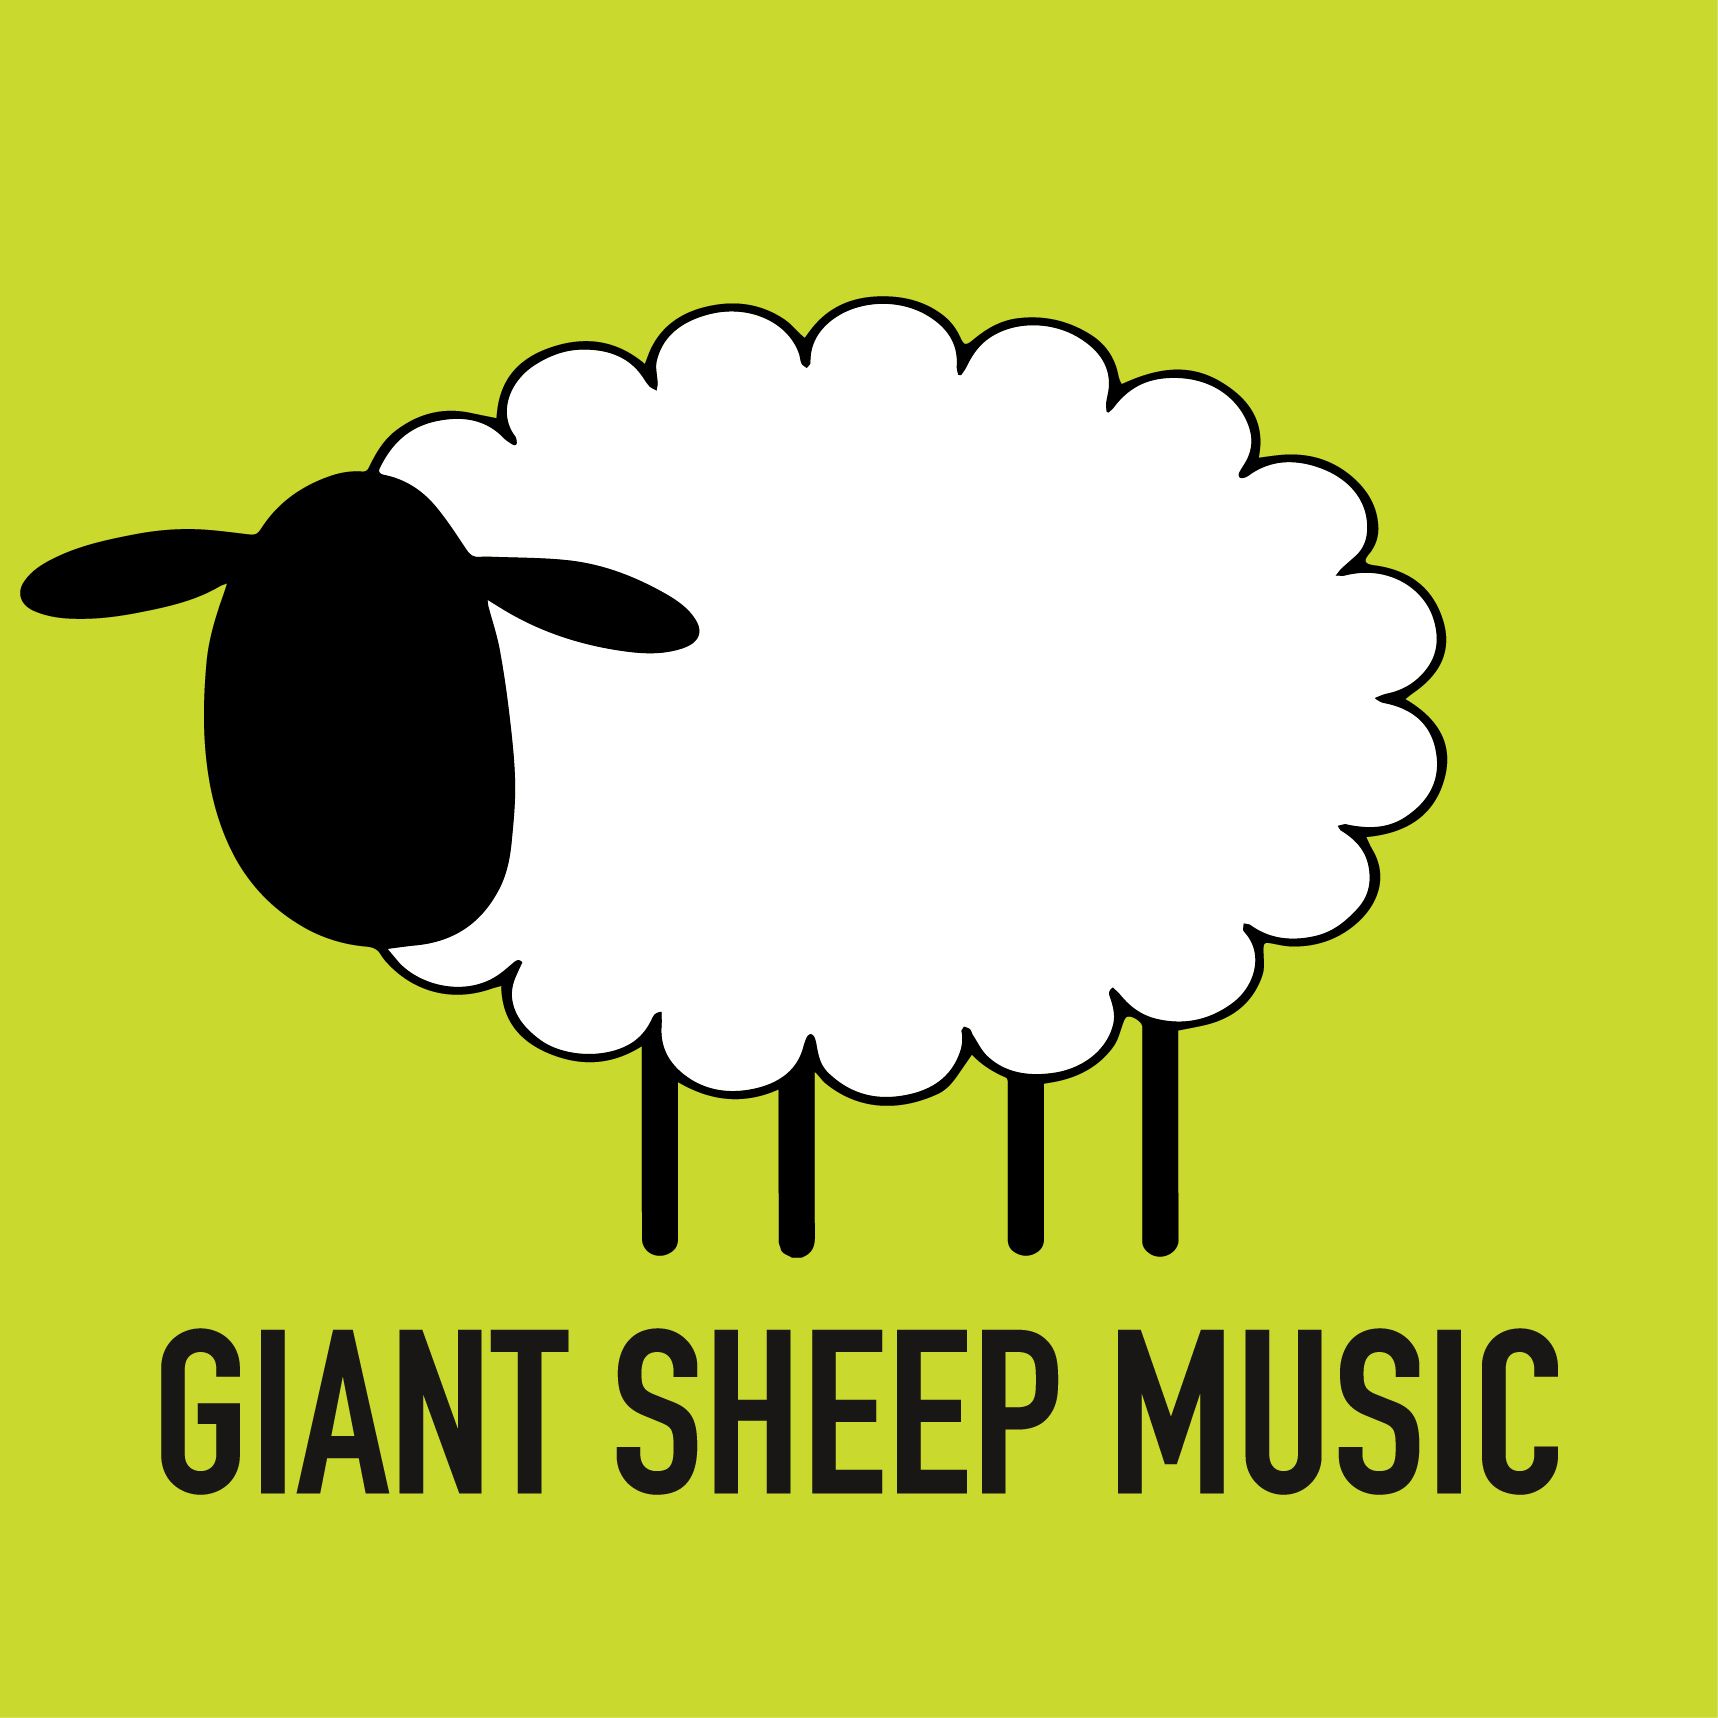 Giant Sheep Music